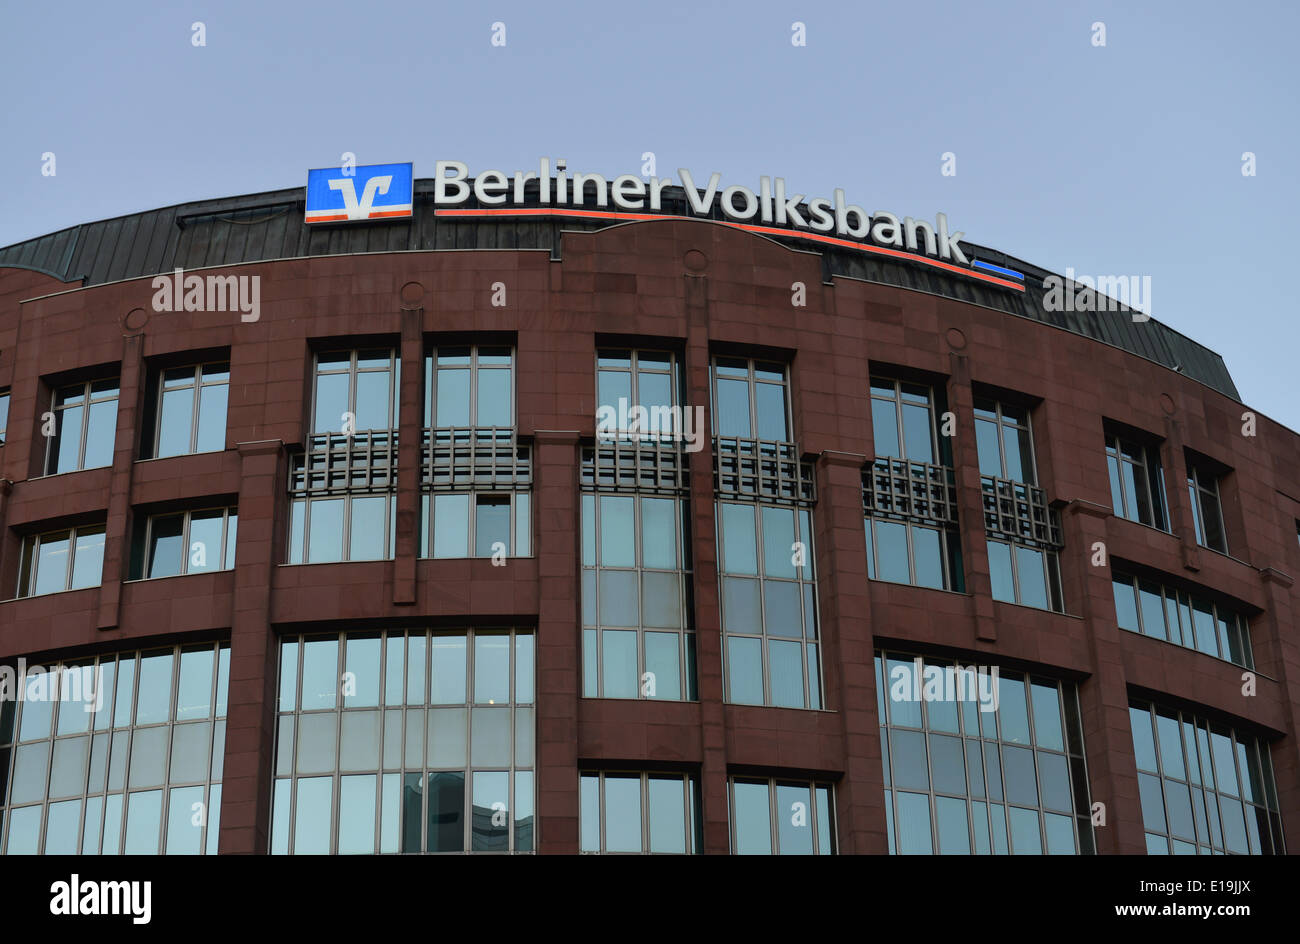 Berliner Volksbank, Budapester Strasse, Tiergarten, Berlin, Deutschland Stock Photo